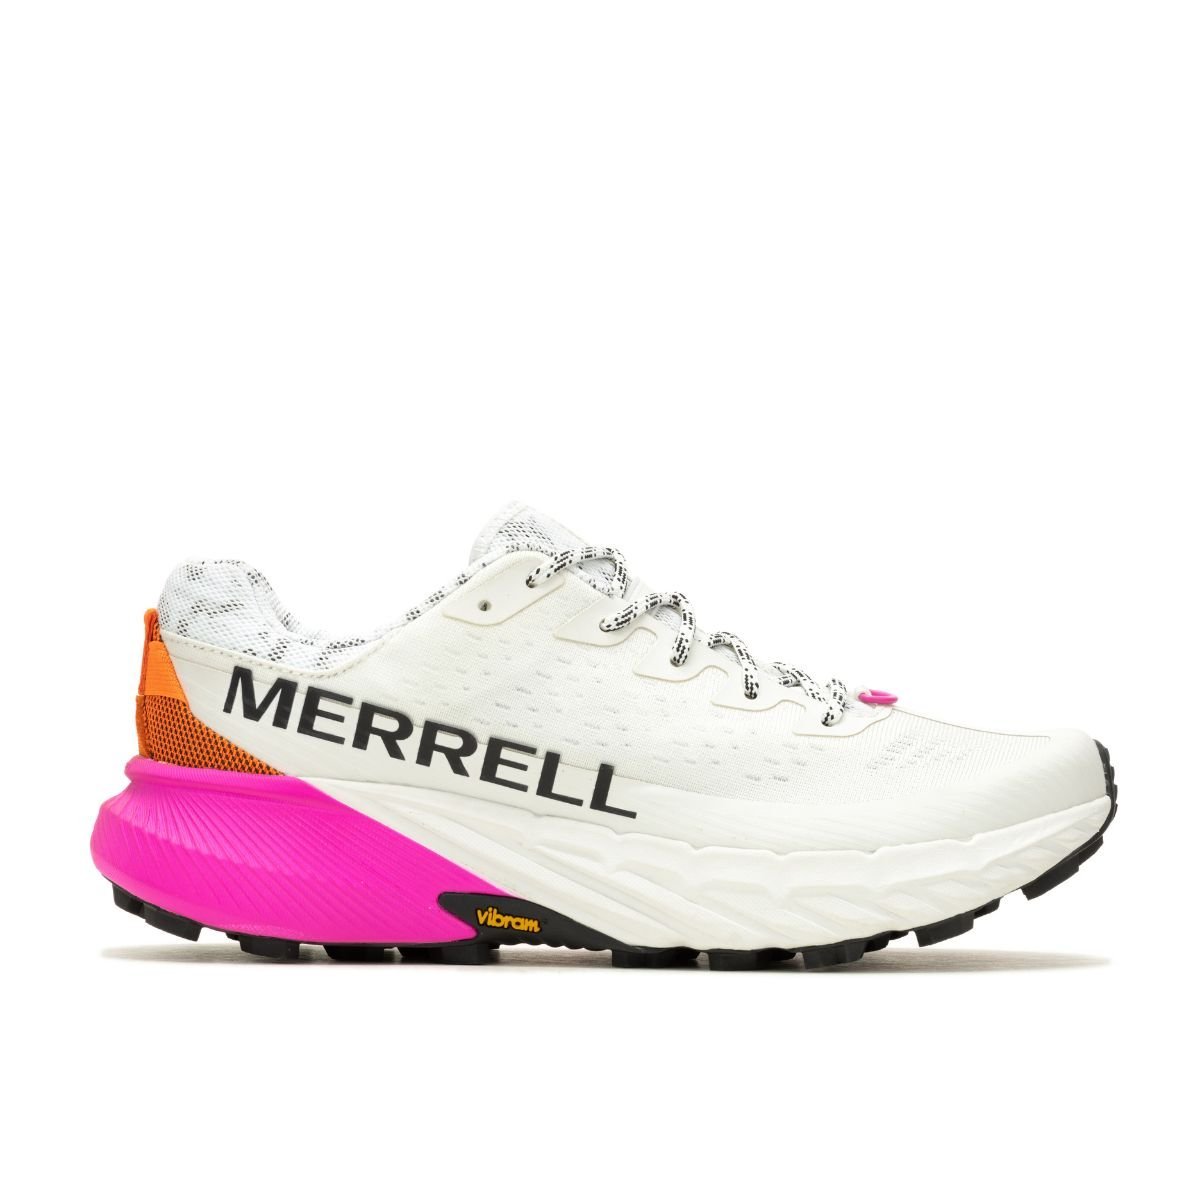 Topánky Merrell J068234 Agility Peak 5 W - biela